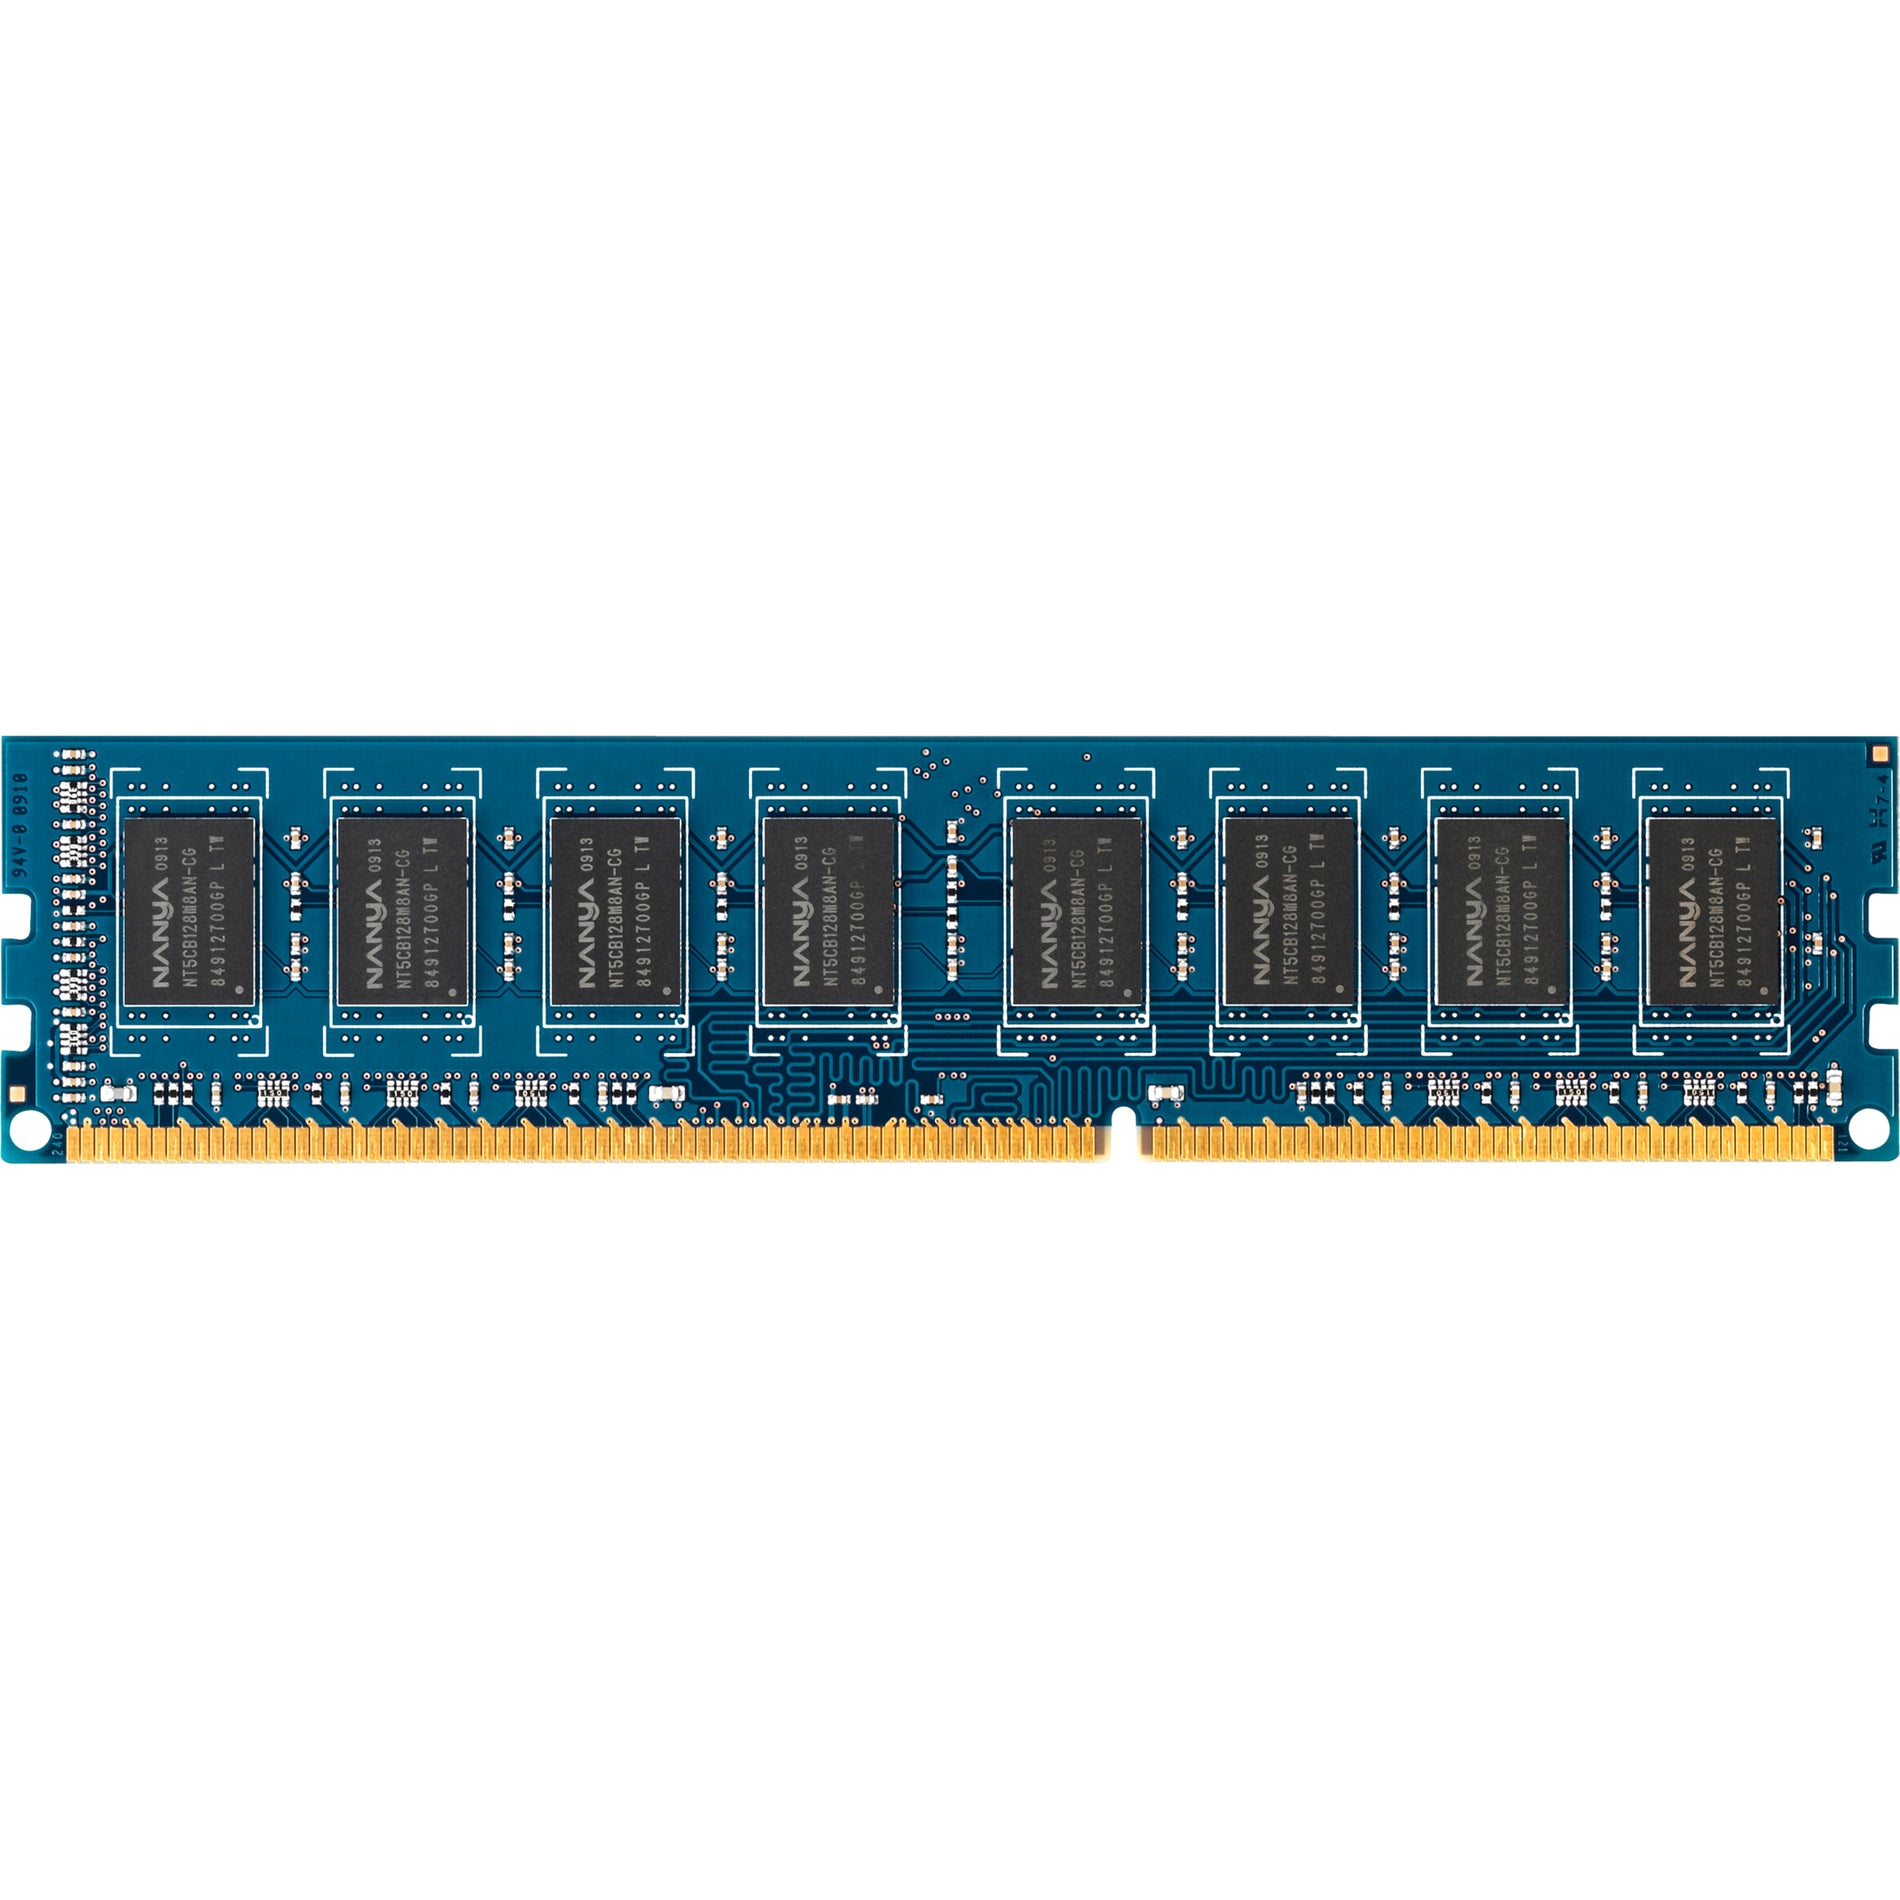 HPE 647903-B21 SmartMemory 32GB DDR3 SDRAM Memory Module, High Performance RAM for Servers